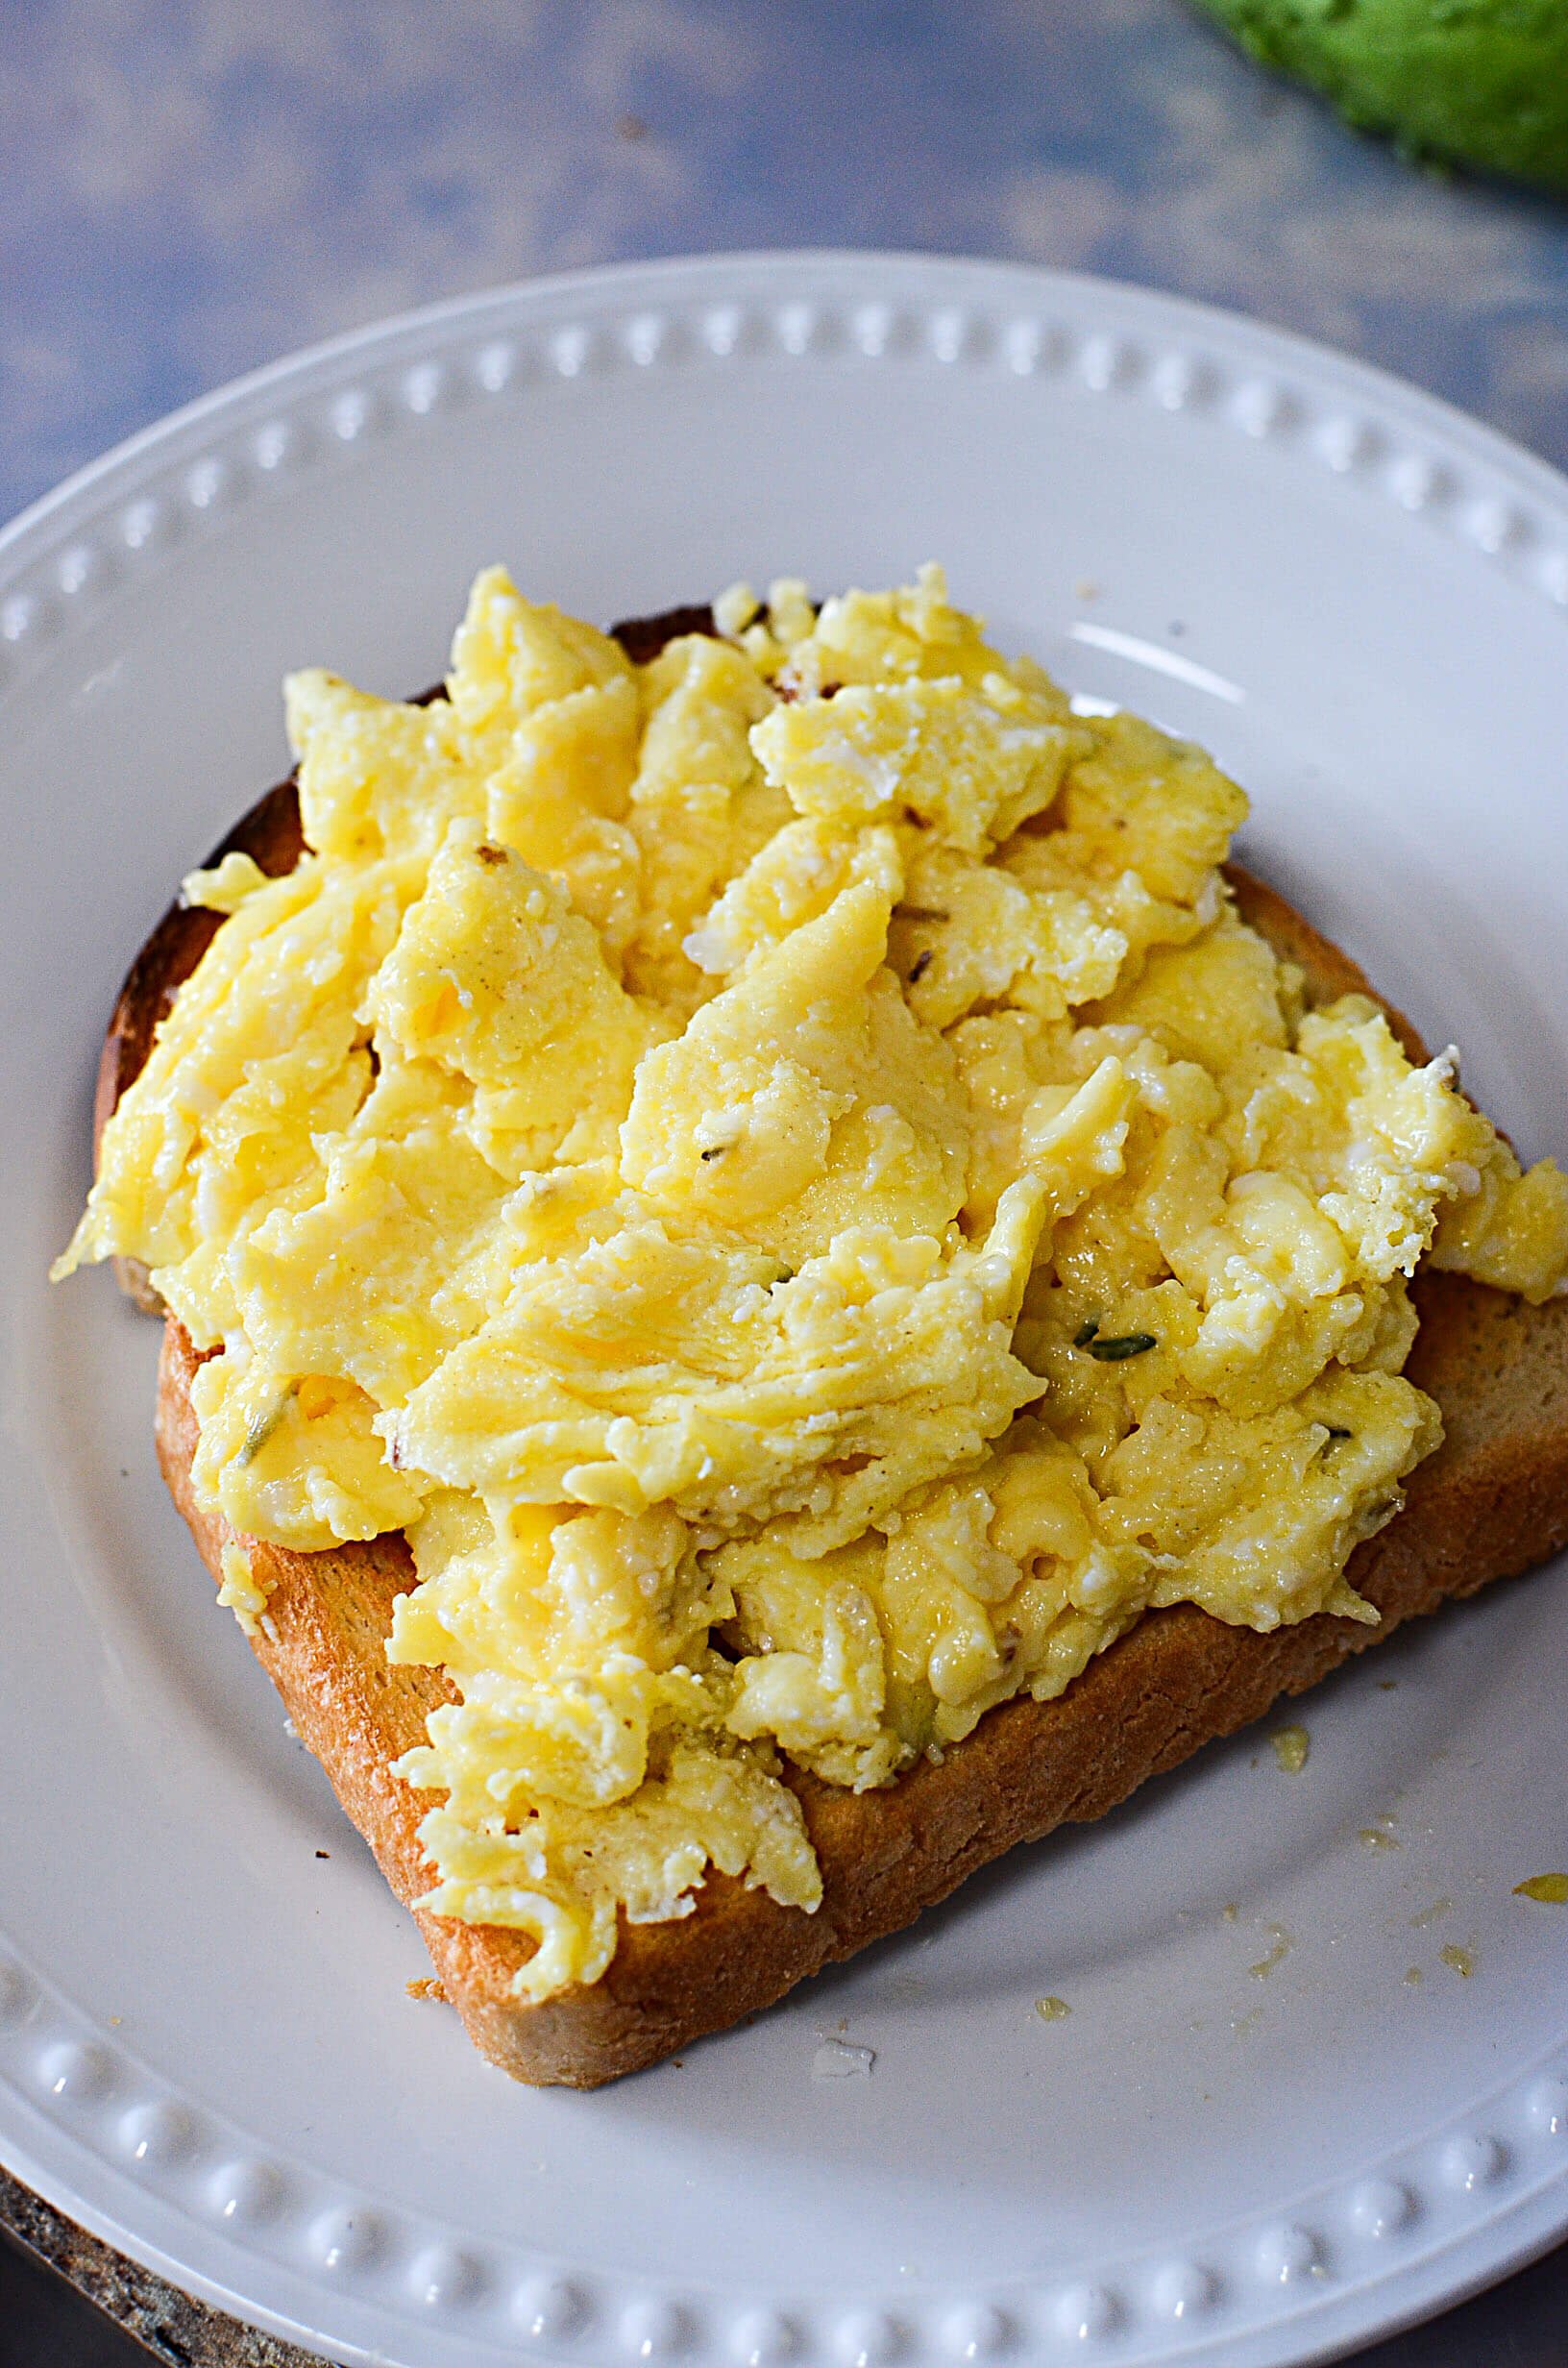 Scrambled eggs sitting on toast.